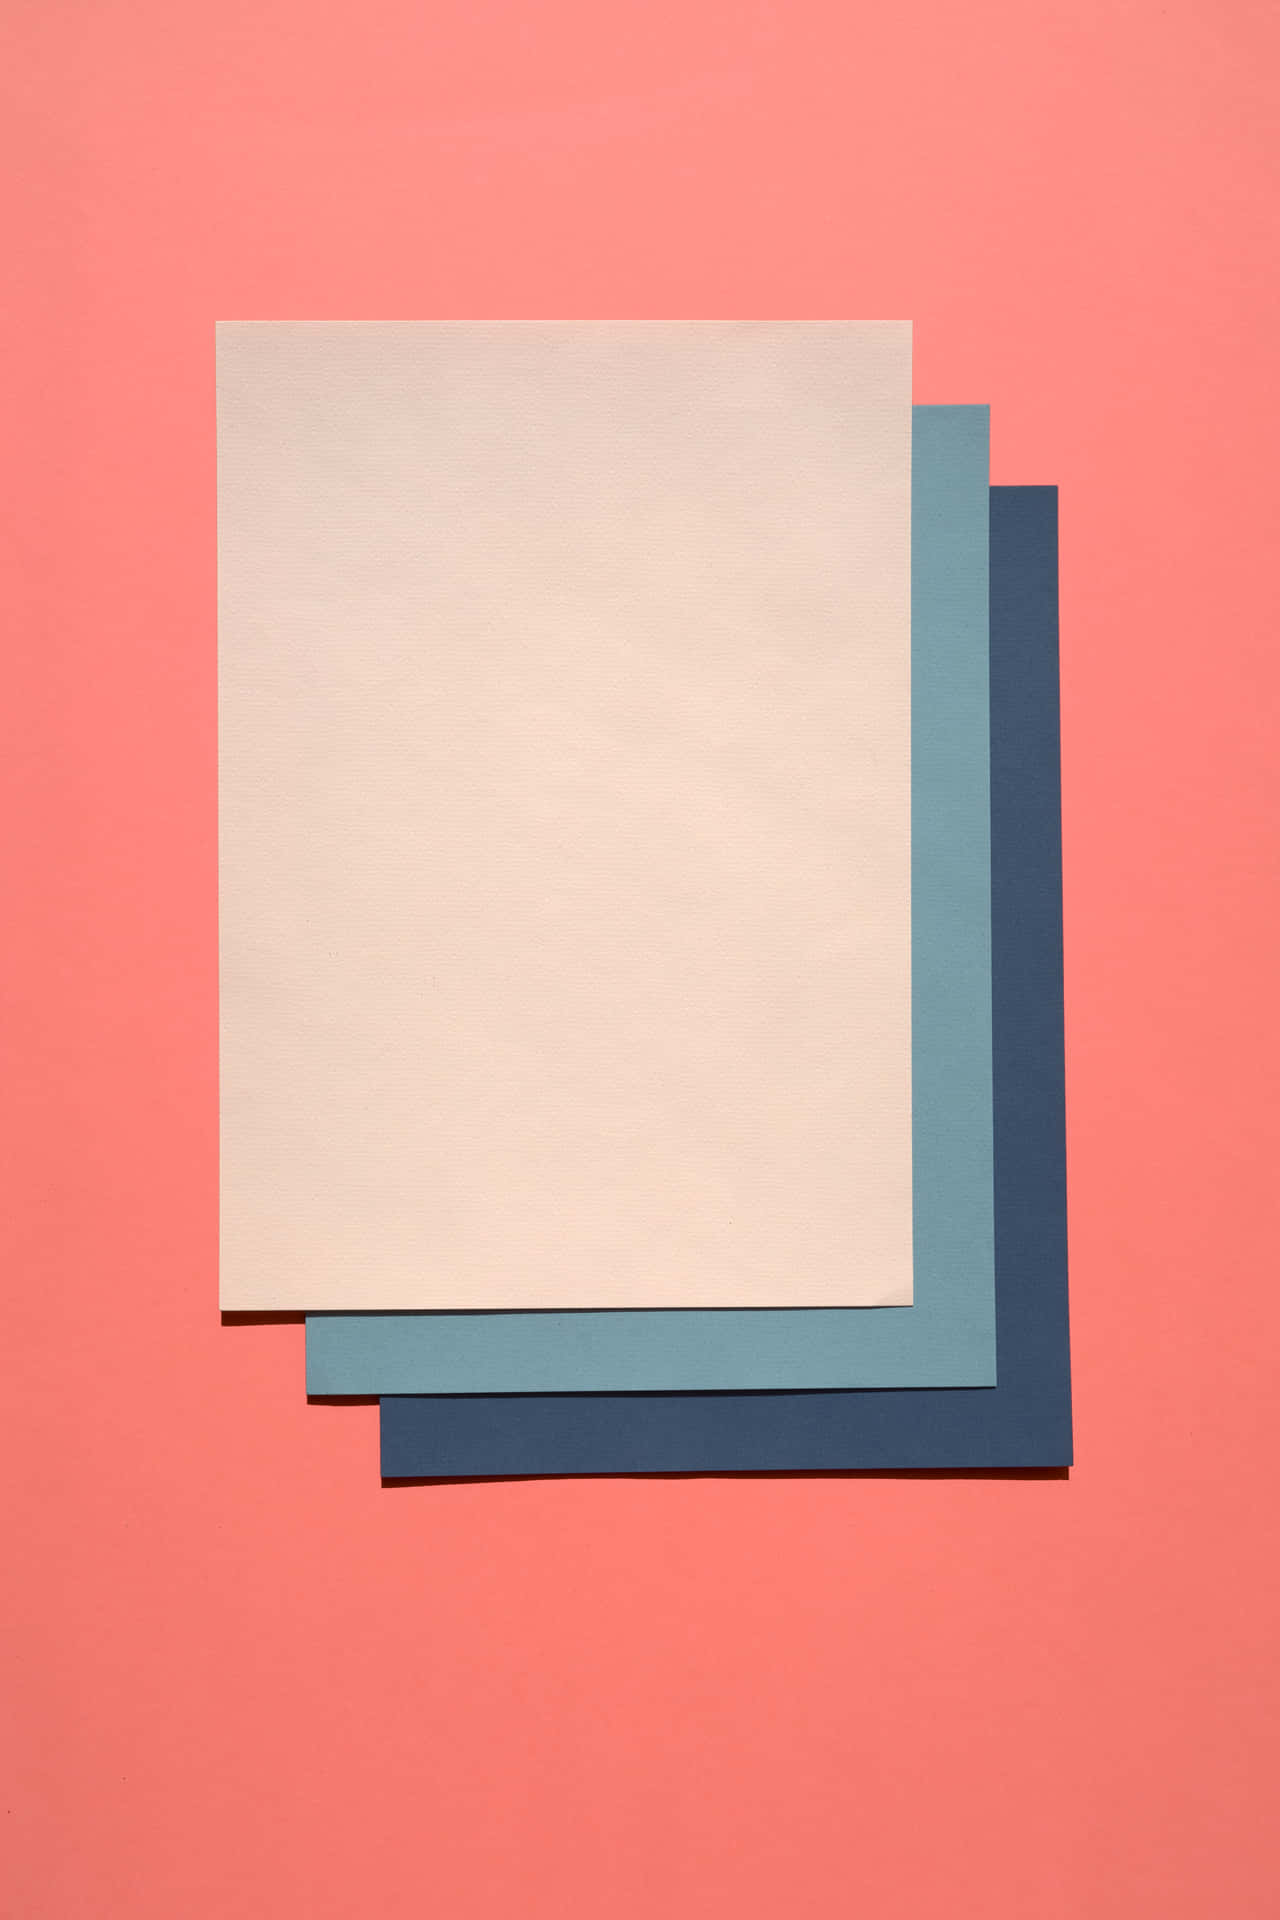 Papir 3733 X 5600 Wallpaper